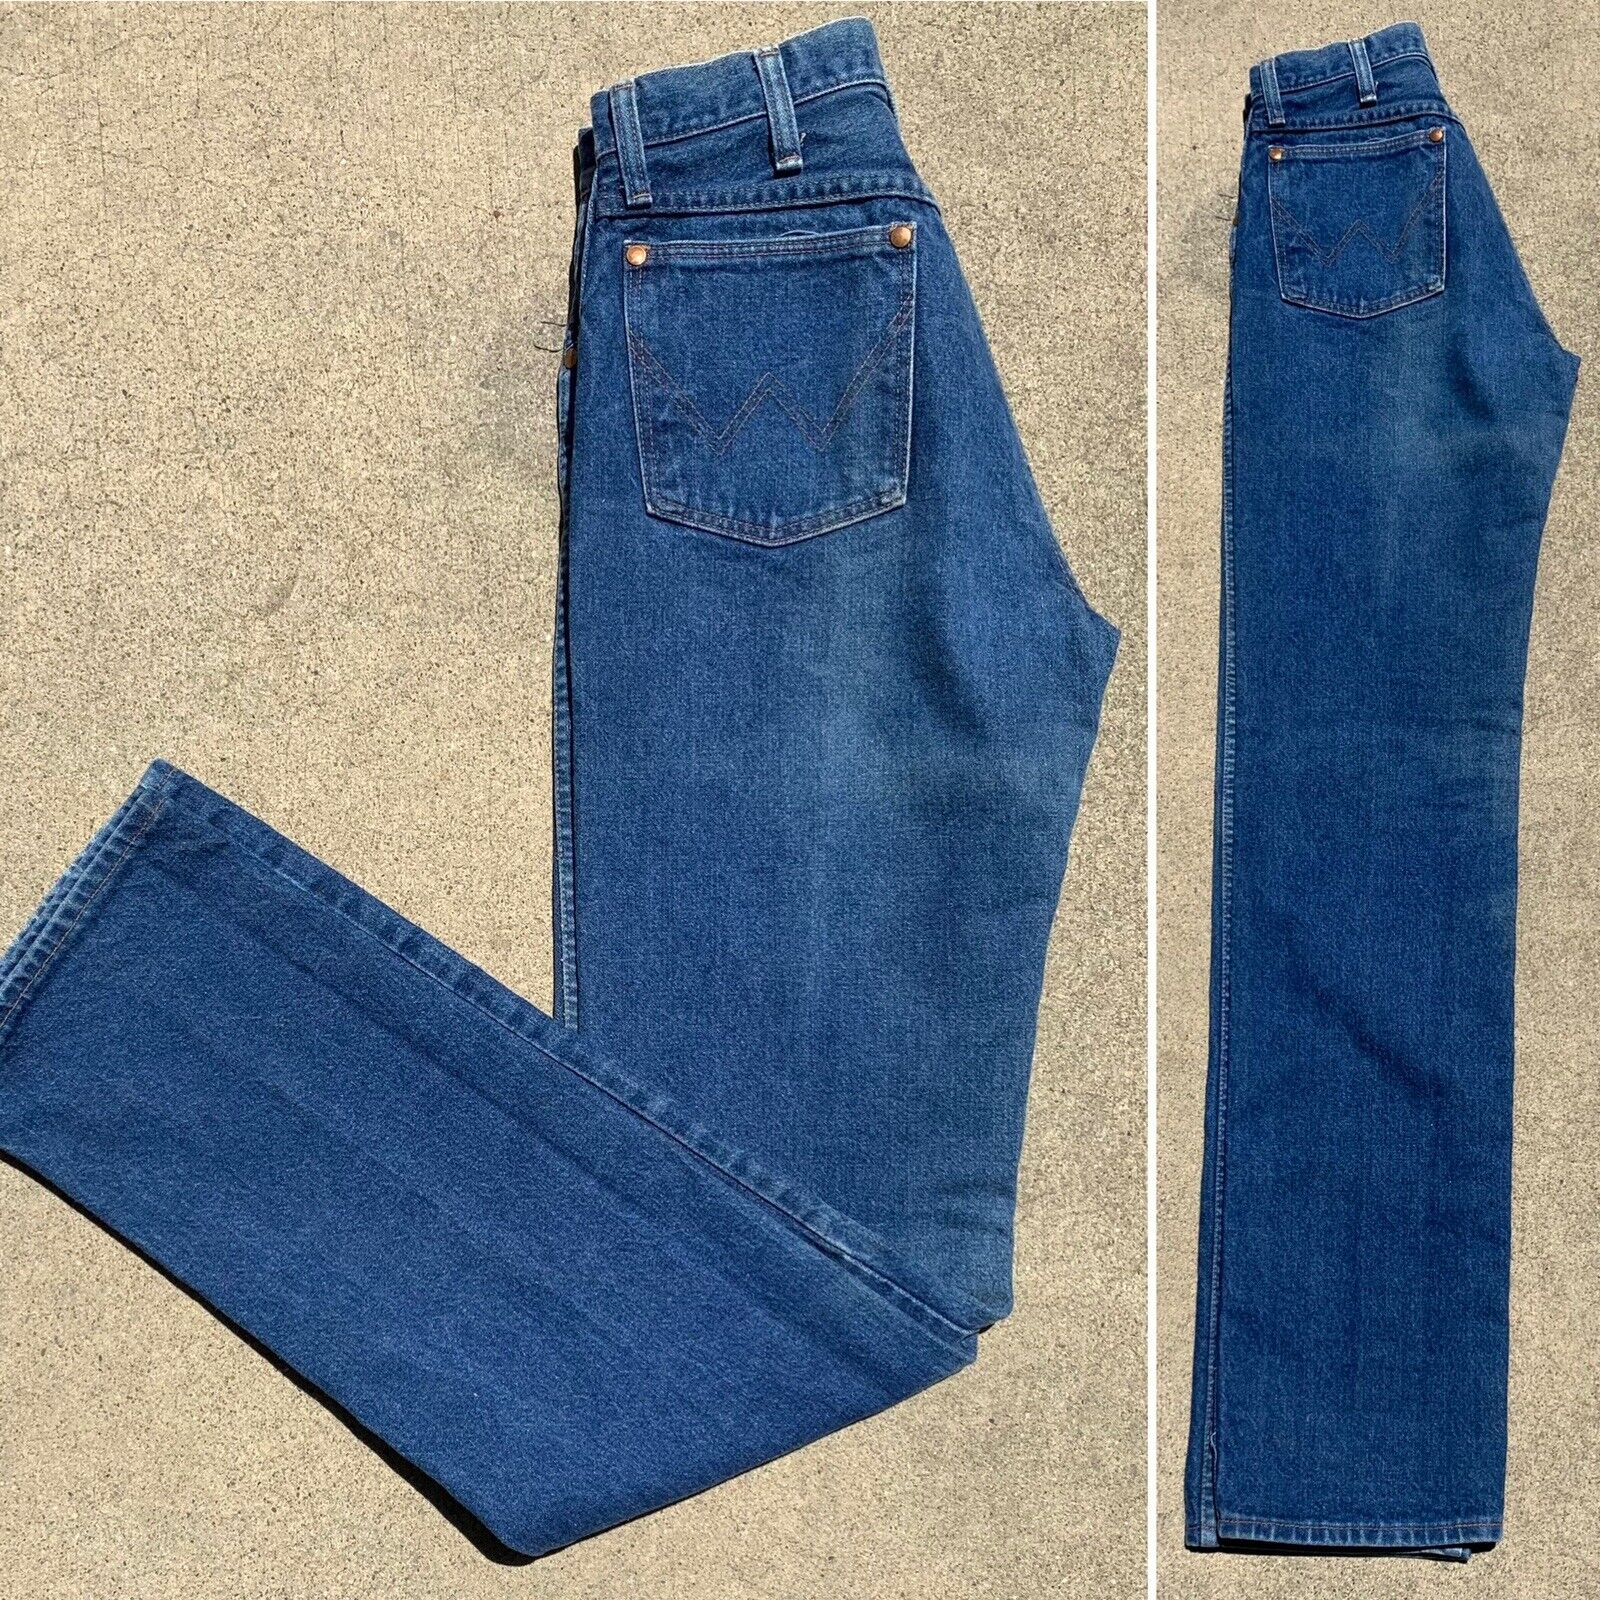 vintage Wrangler Jeans high waist 13MWZG size 7 X 36 27” Waist Made In USA